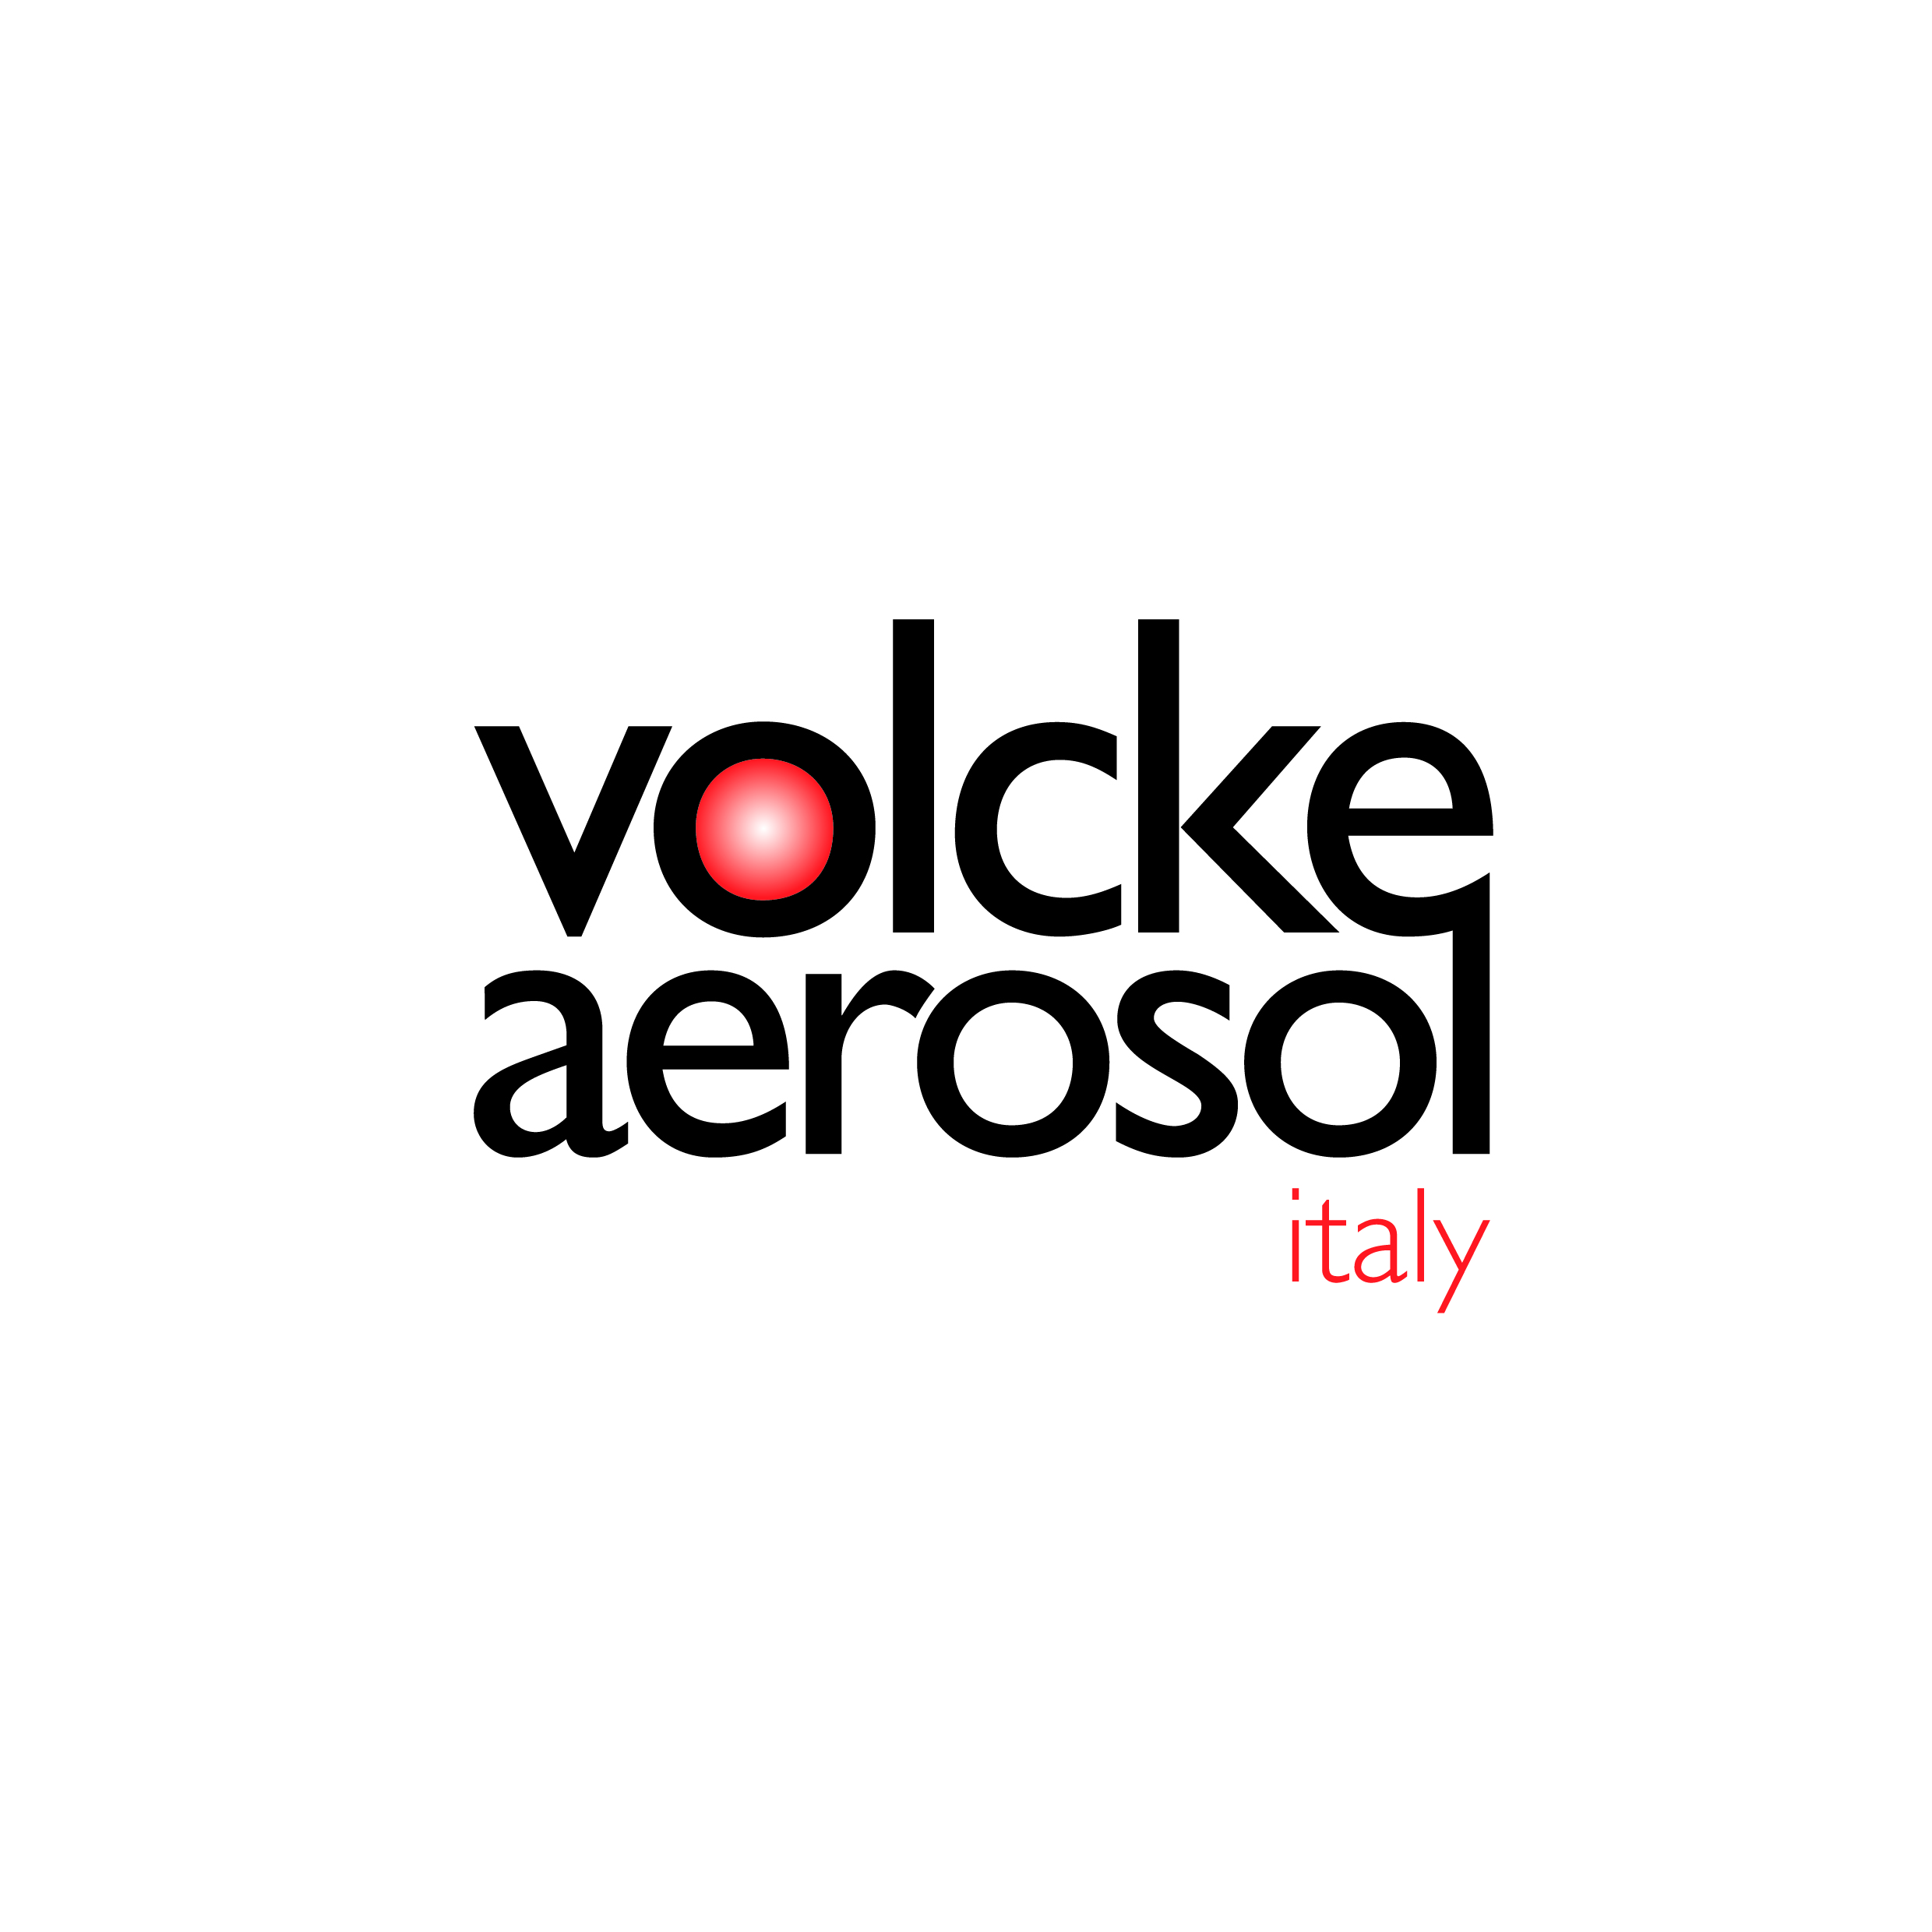 Volcke Aerosol Italy